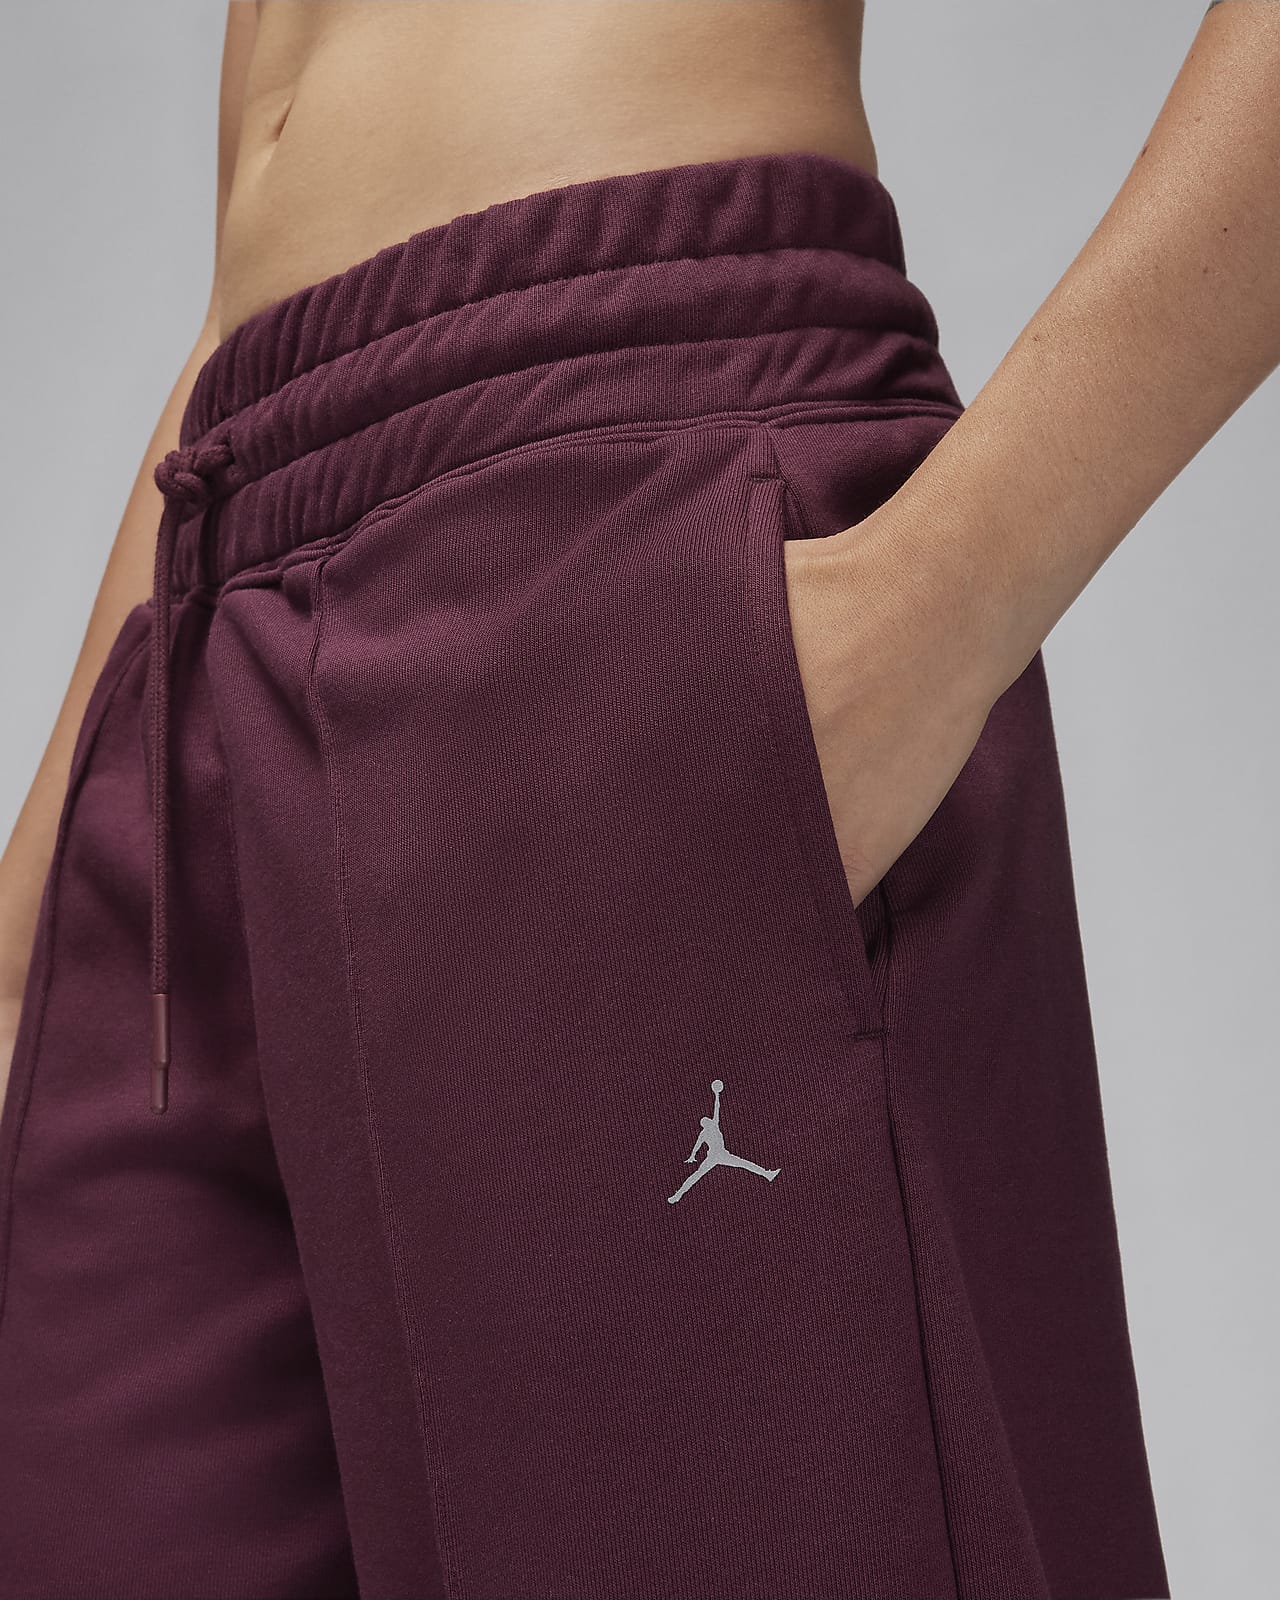 Pants de tejido Fleece para mujer Jordan Sport. Nike MX